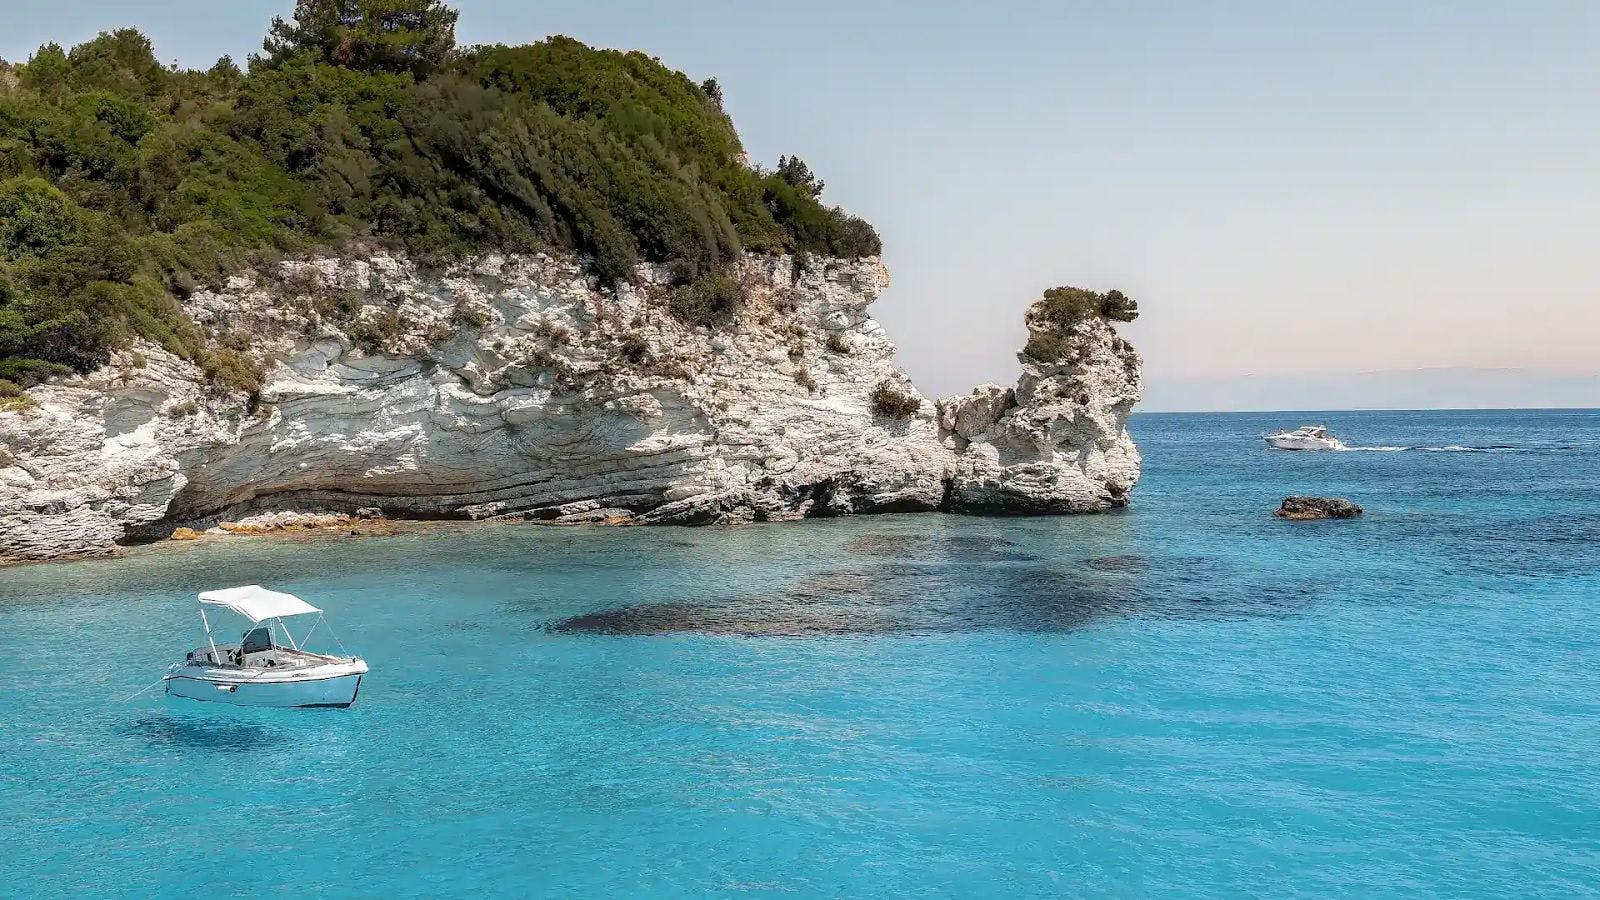 Beautiful Greek islands